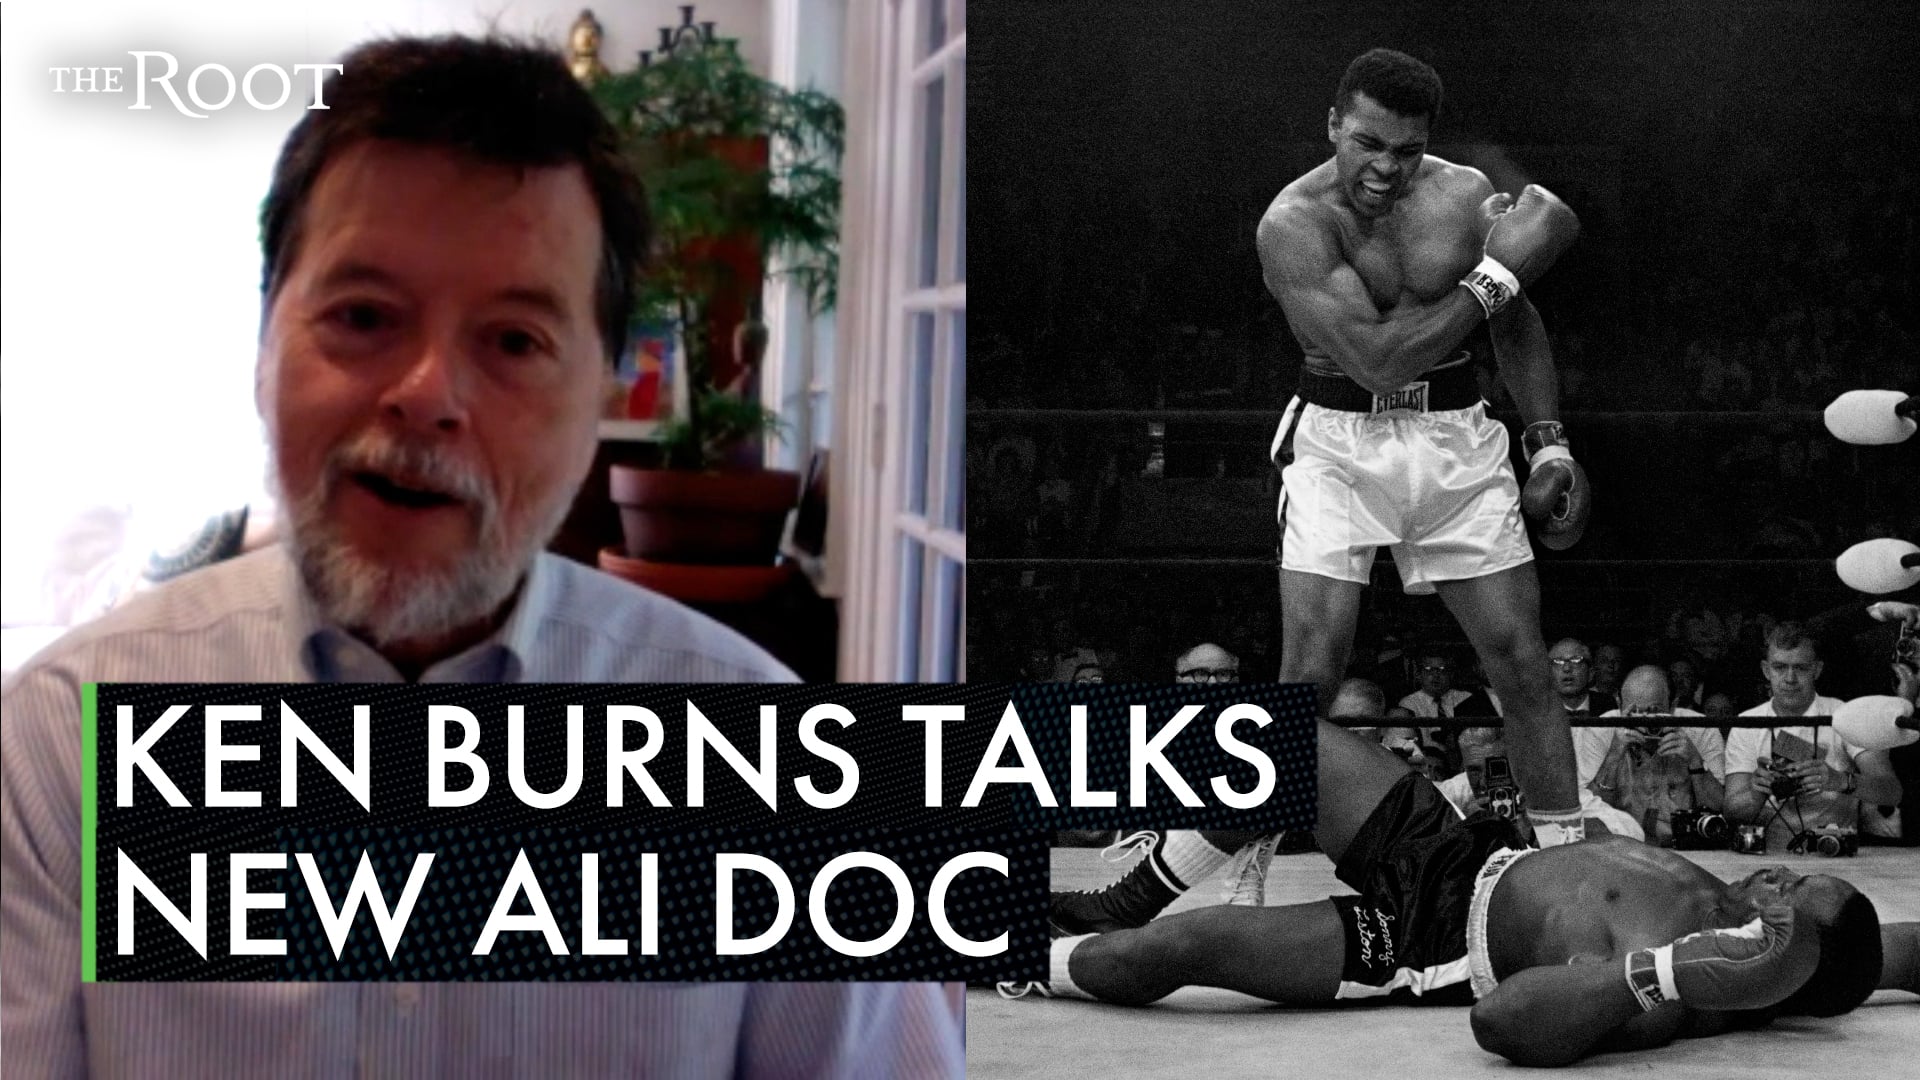 The Root: "Ken Burns Talks New Ali Doc"